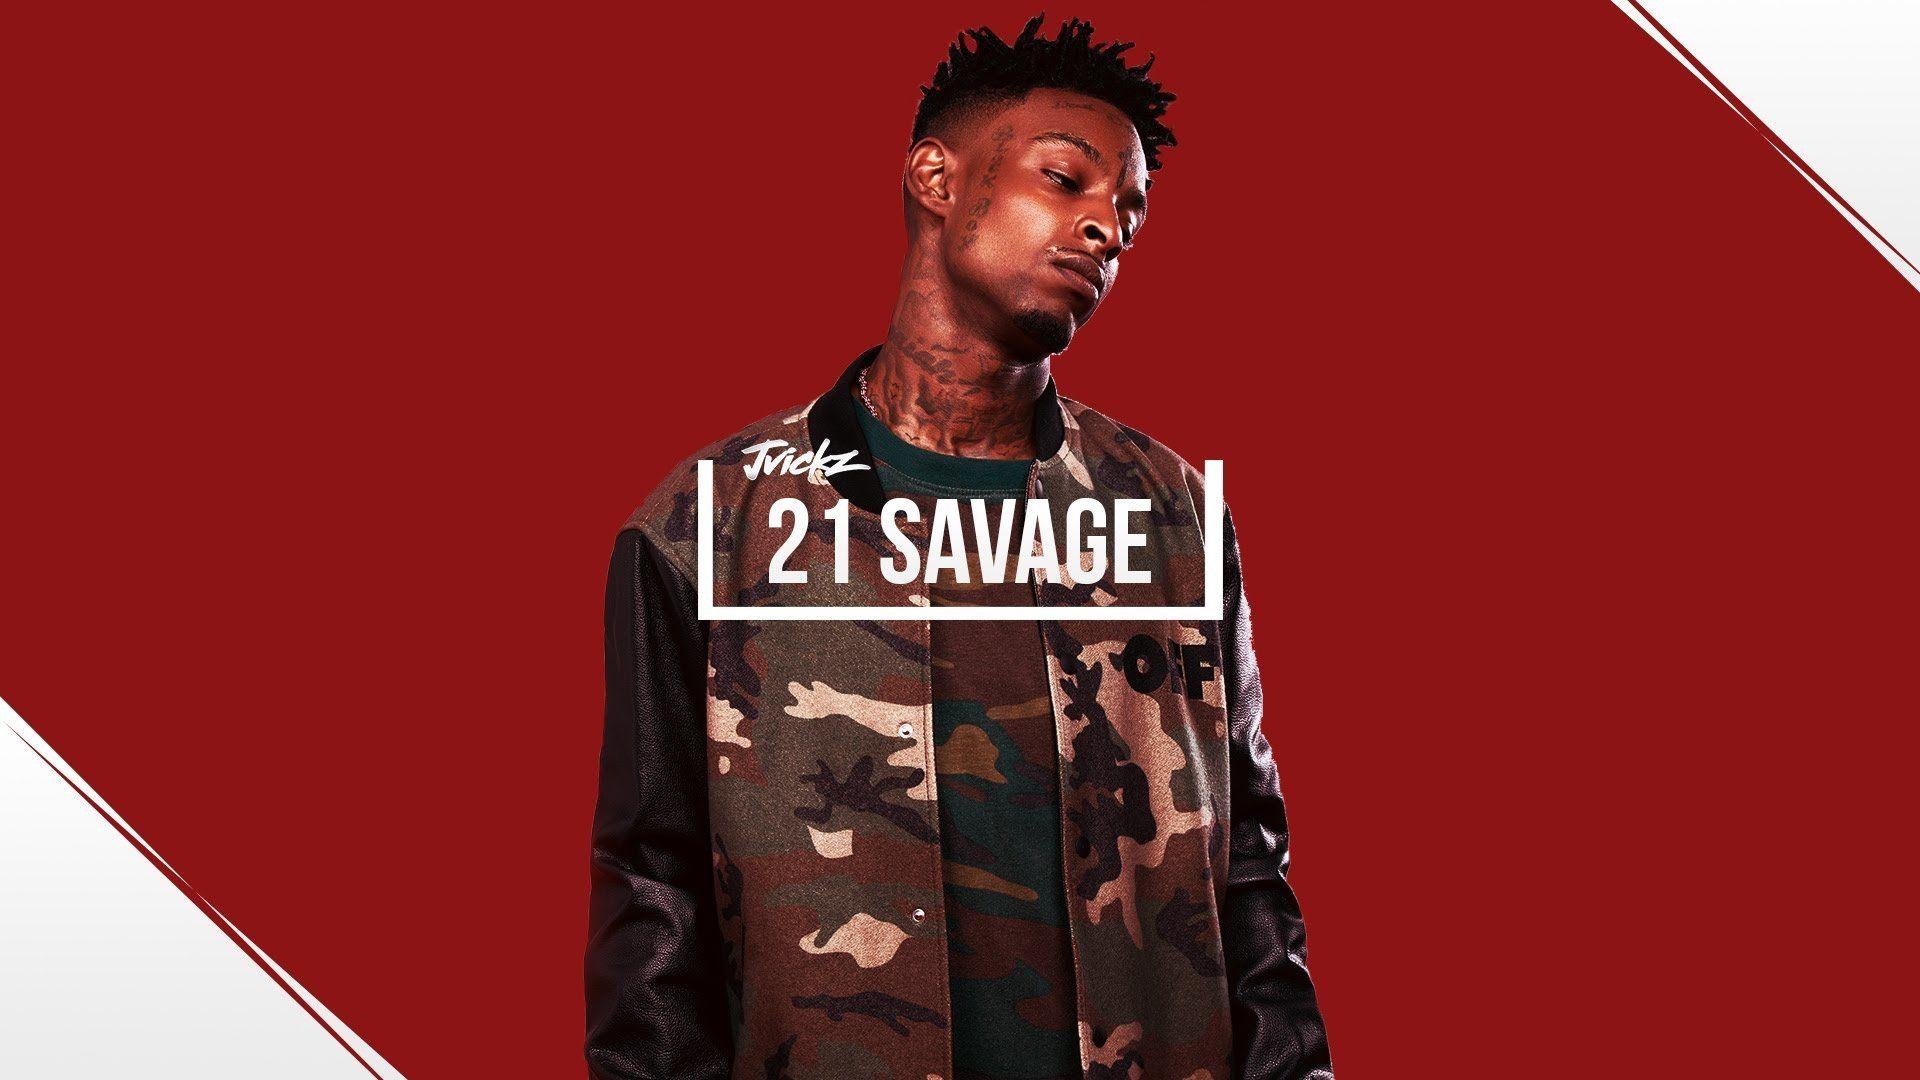 Savage Album Cover Wallpaper Free 21 Savage Album Cover Background